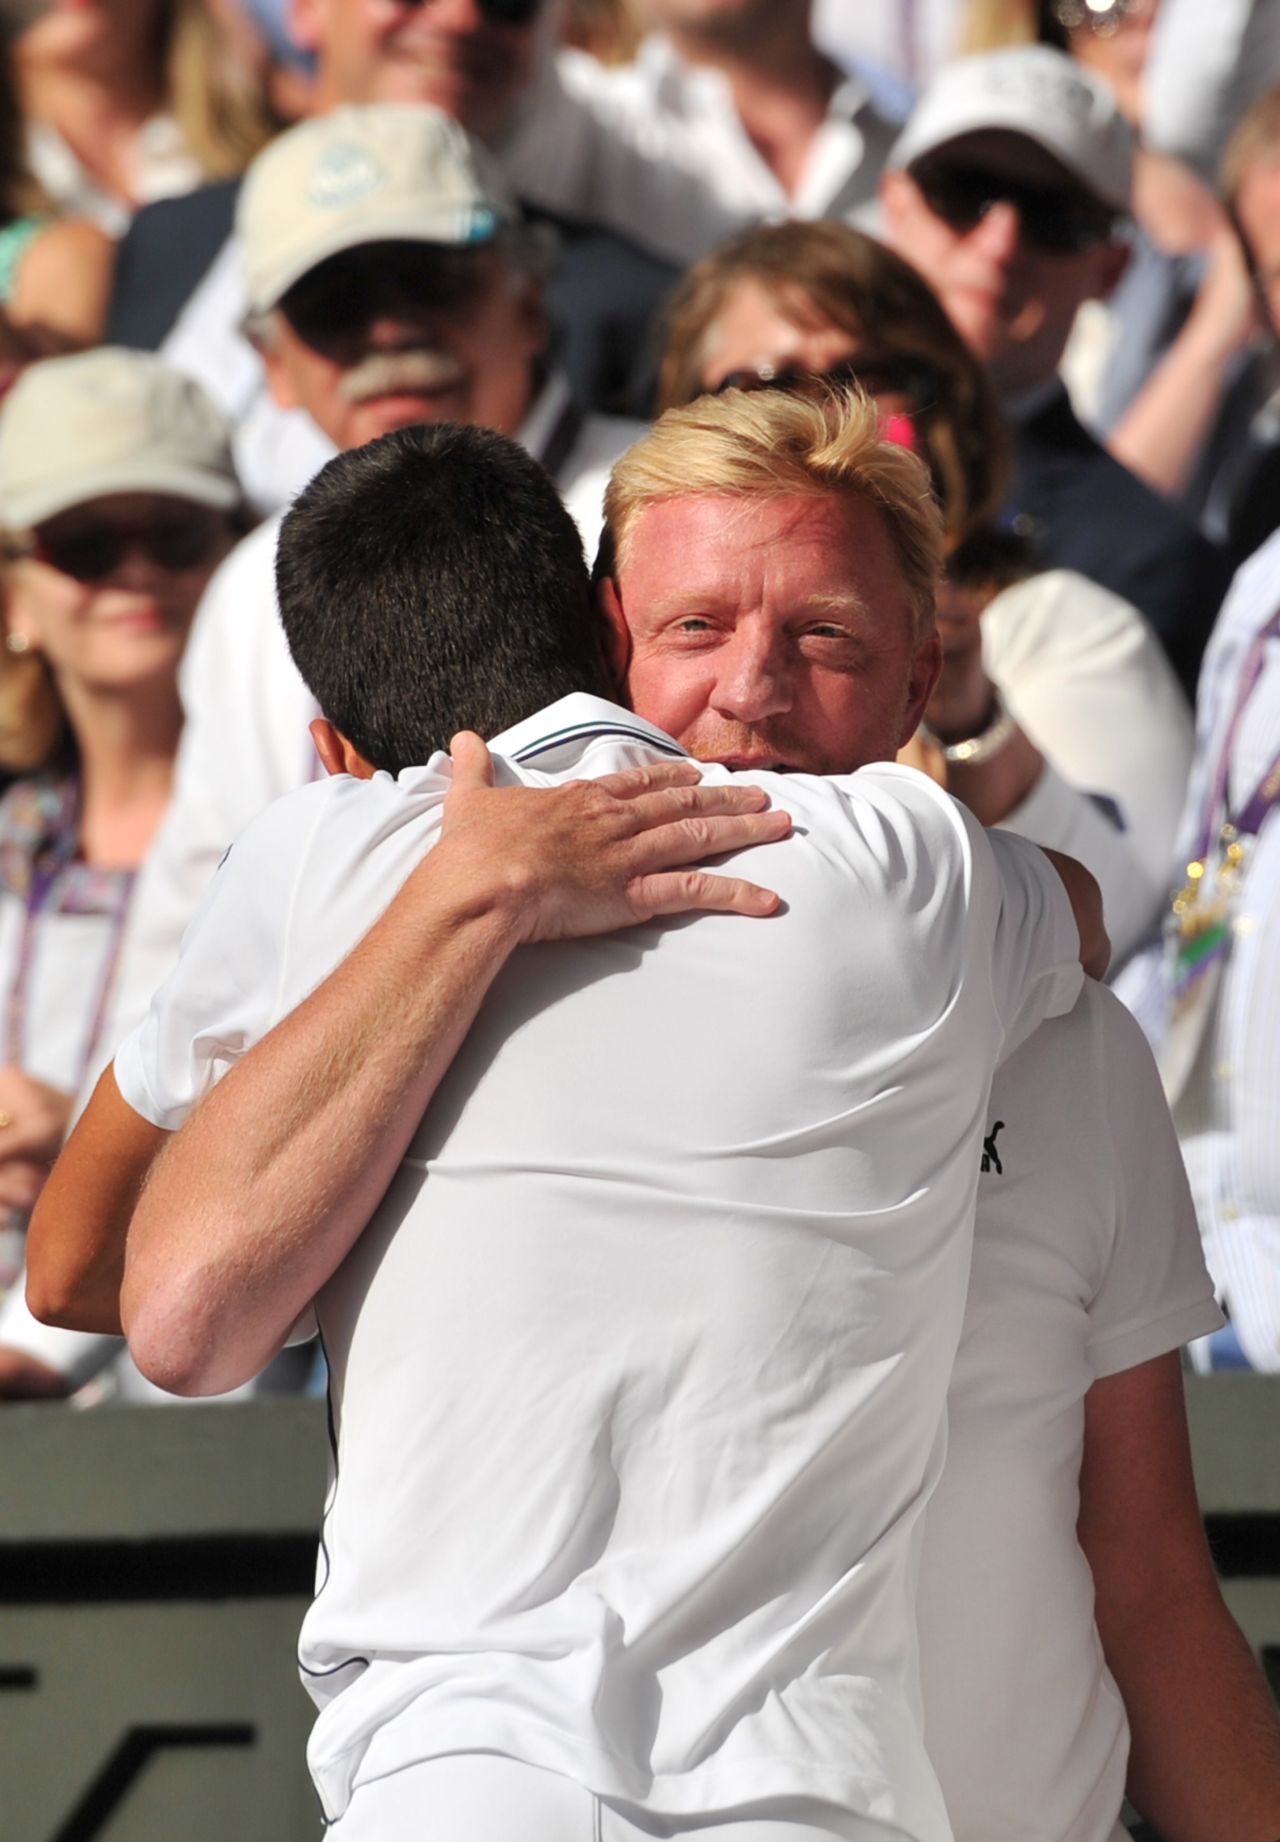 Boris Becker hugs Novak Djokovic after the Serbian wins the first grand slam under his guidance as coach,  beating Roger Federer in a thrilling Wimbledon final in July.